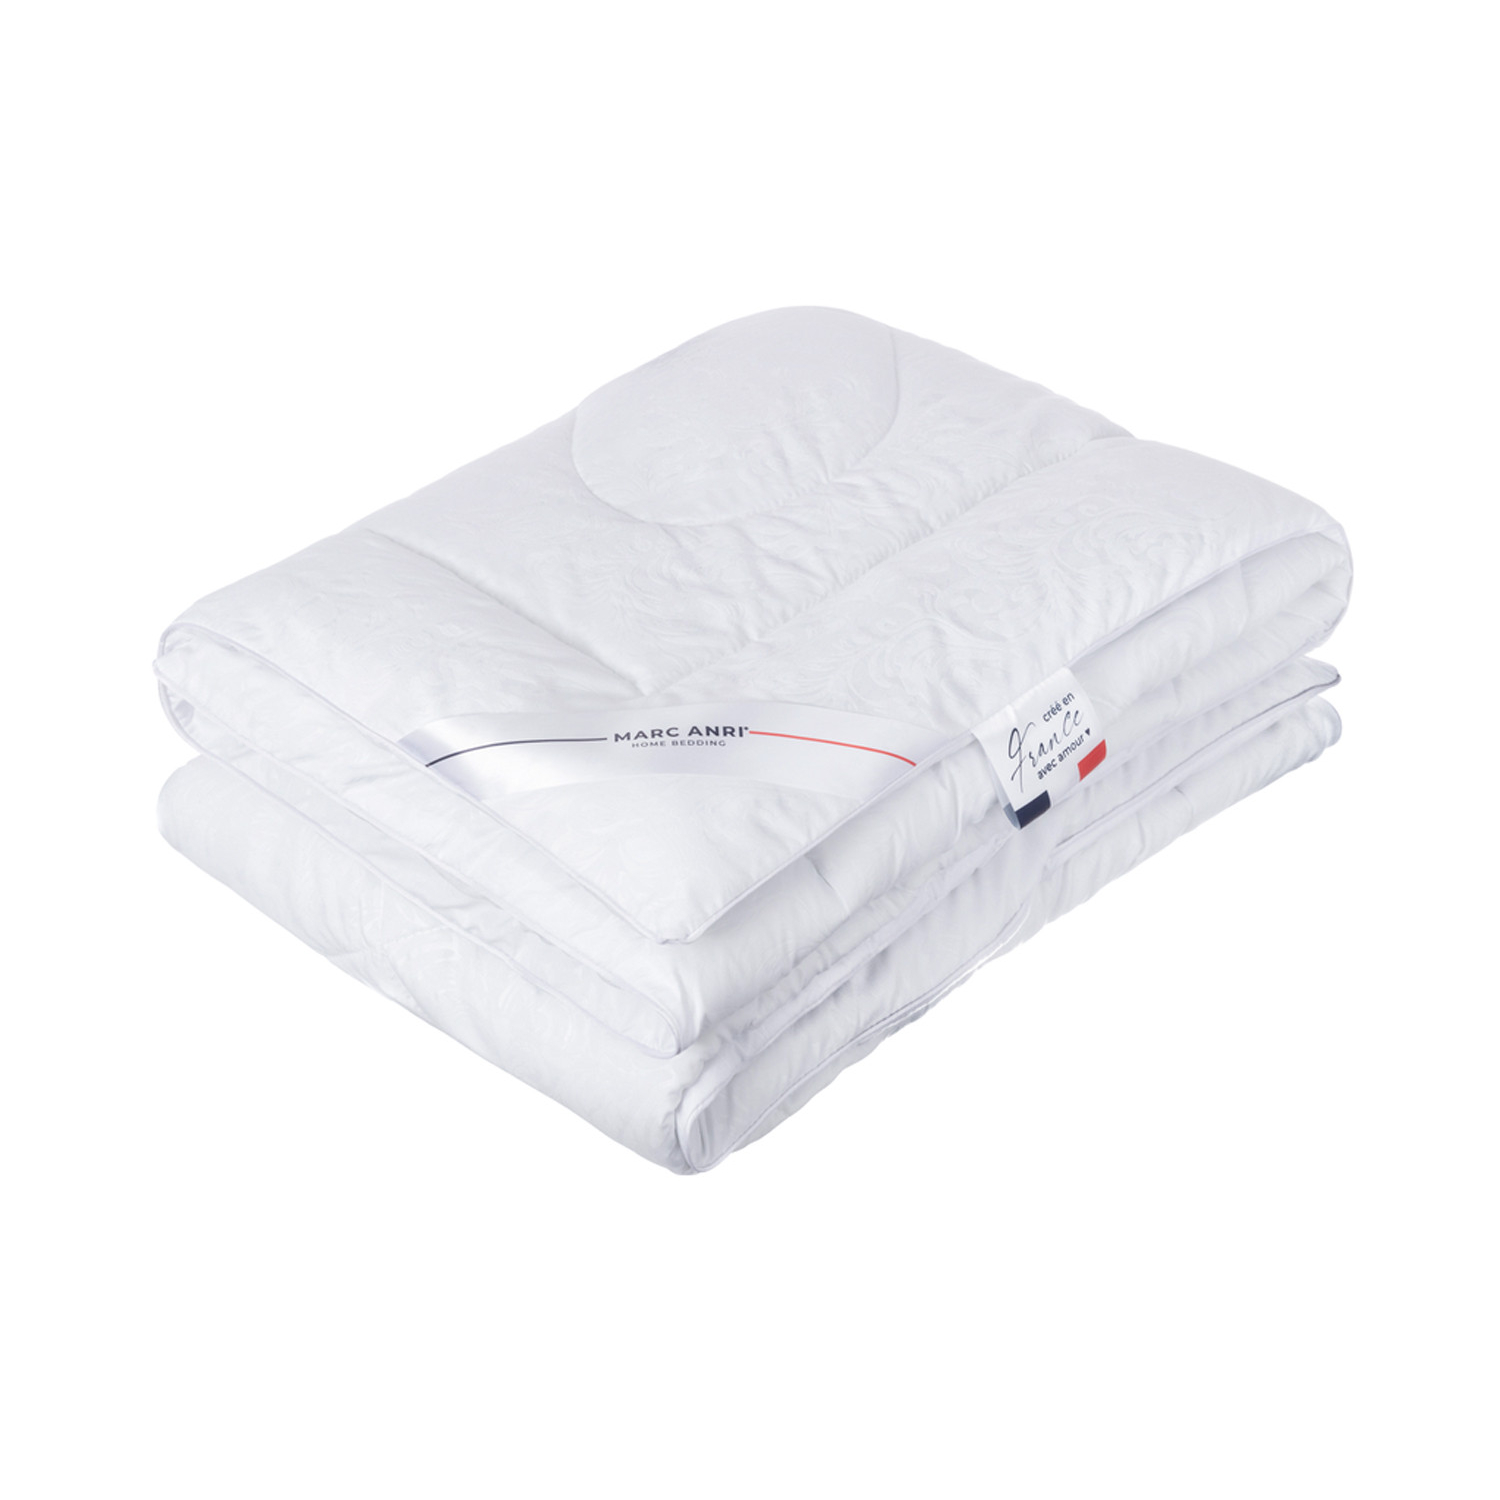 Одеяло Marc Anri Chinon белое 140х200 см (MA-MF) одеяло marc anri barr белое 200х220 см ma dc